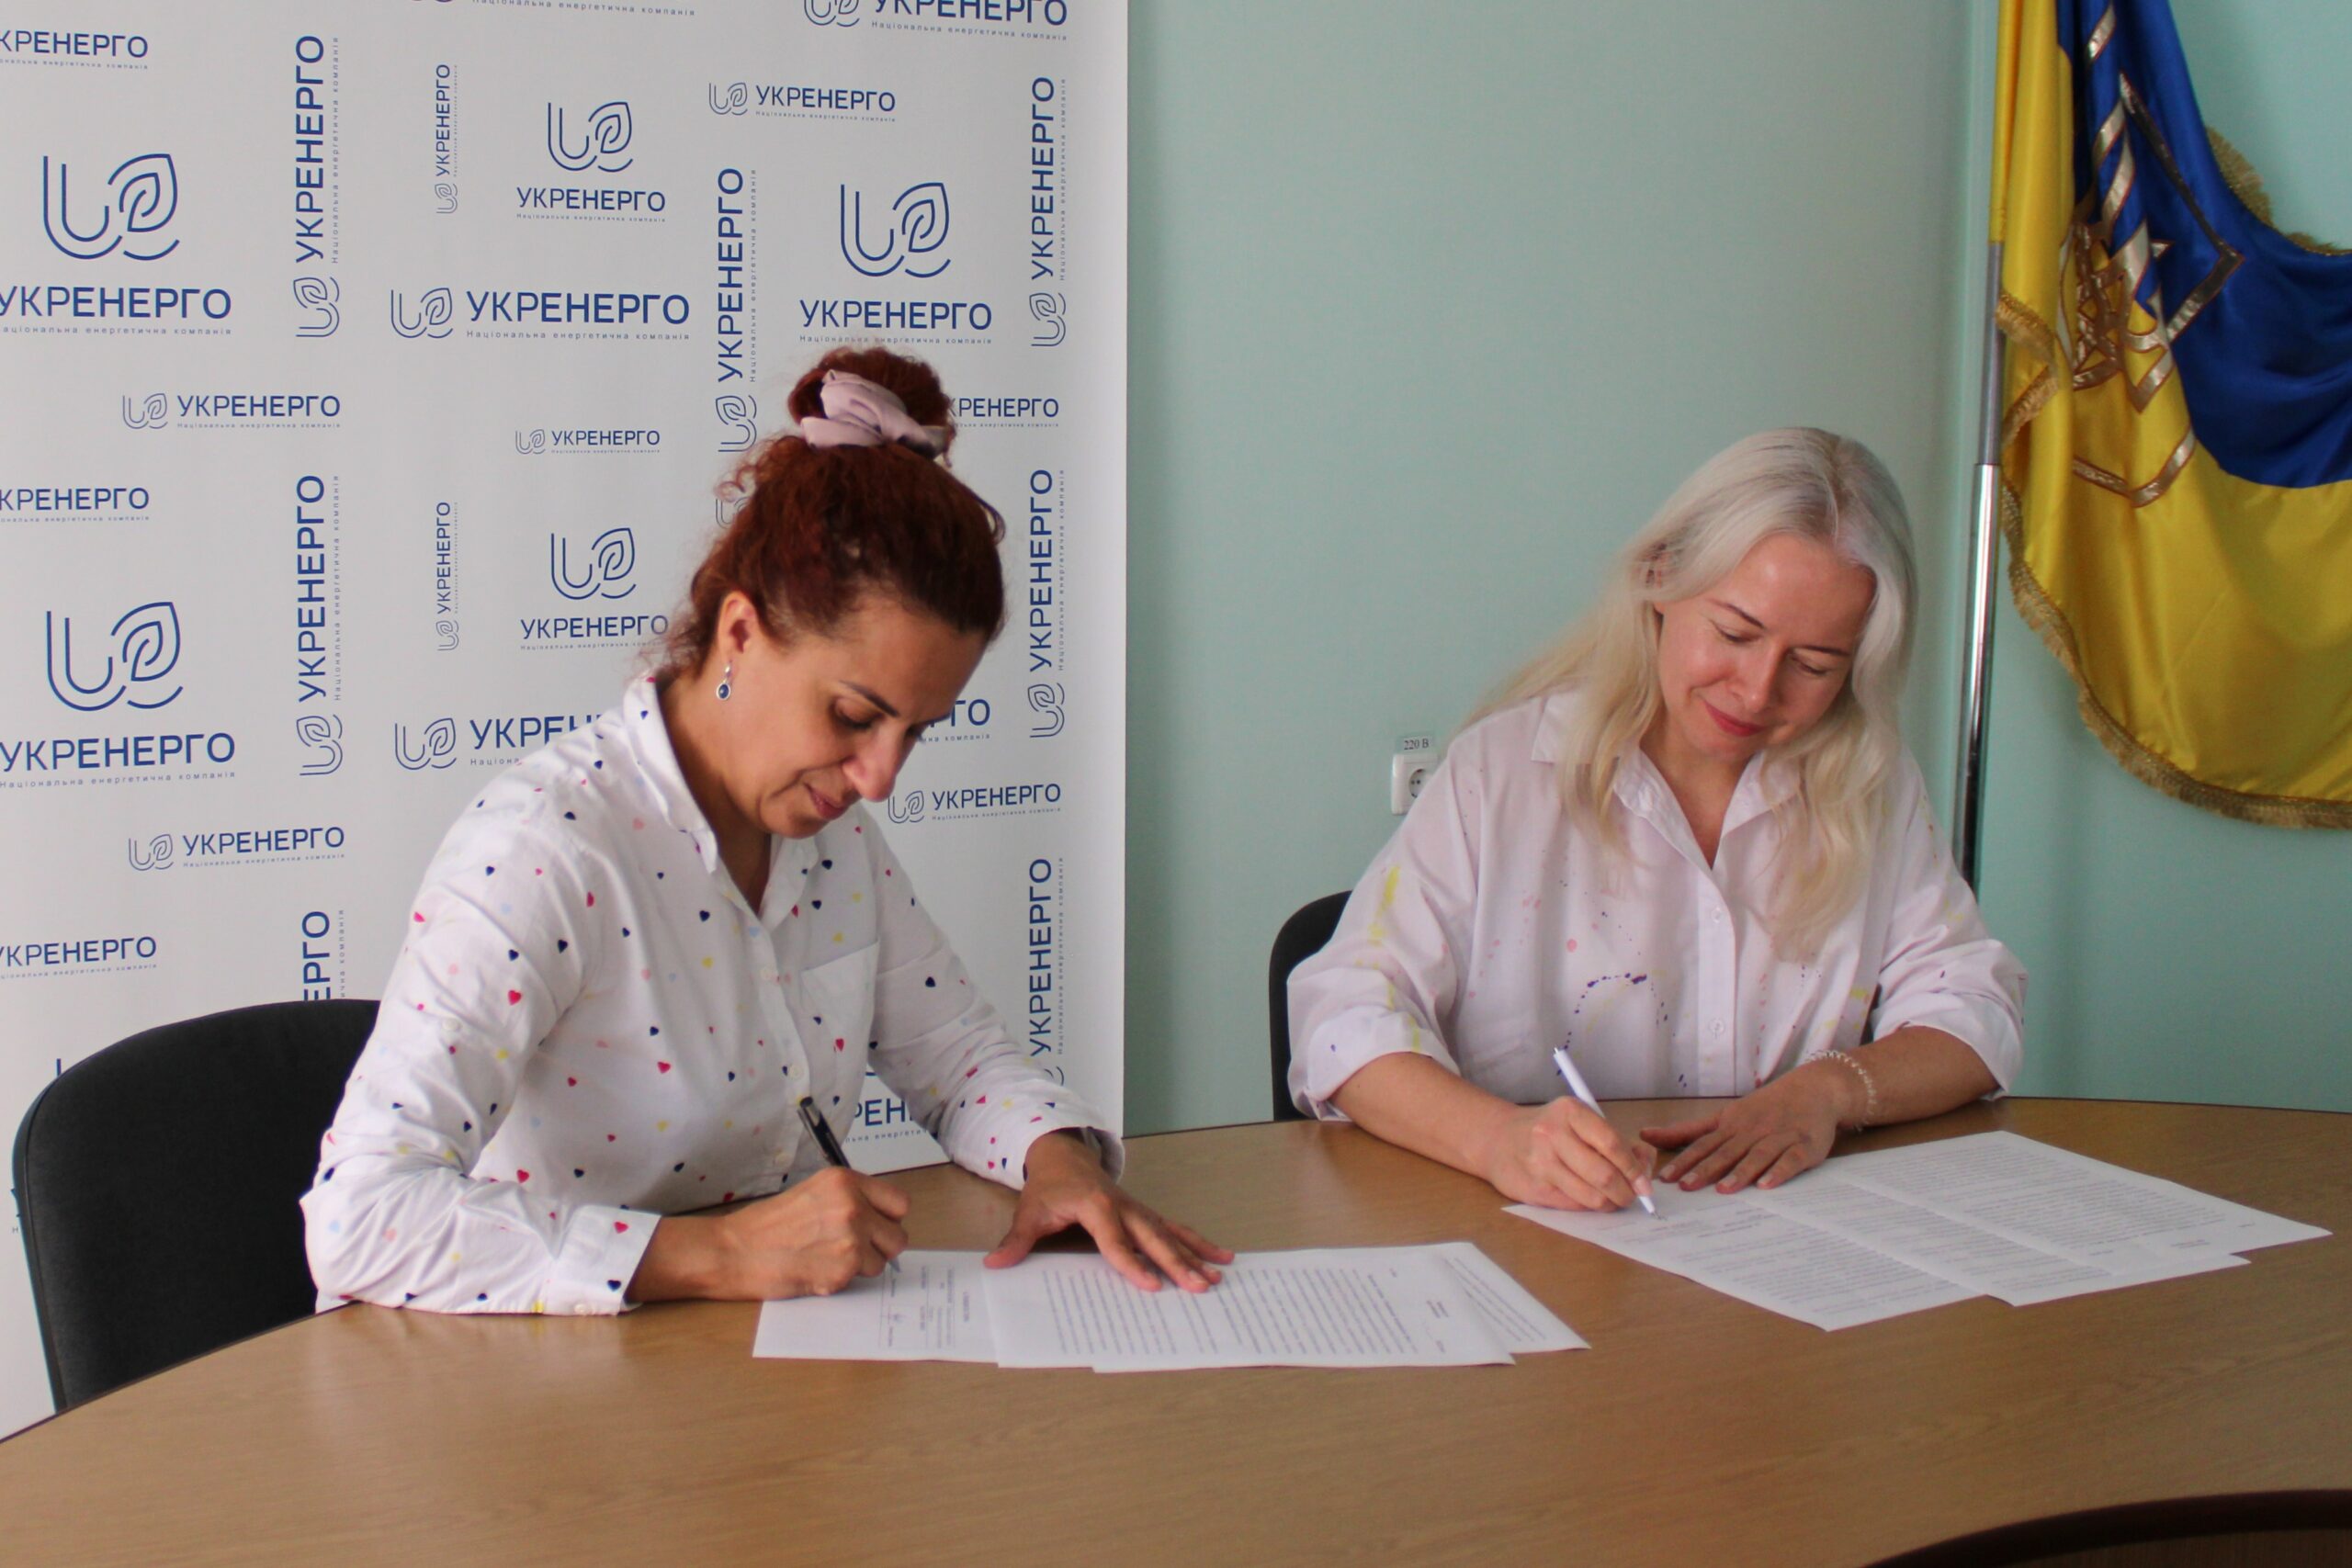 The UVF and Ukrenergo signed a memorandum of cooperation